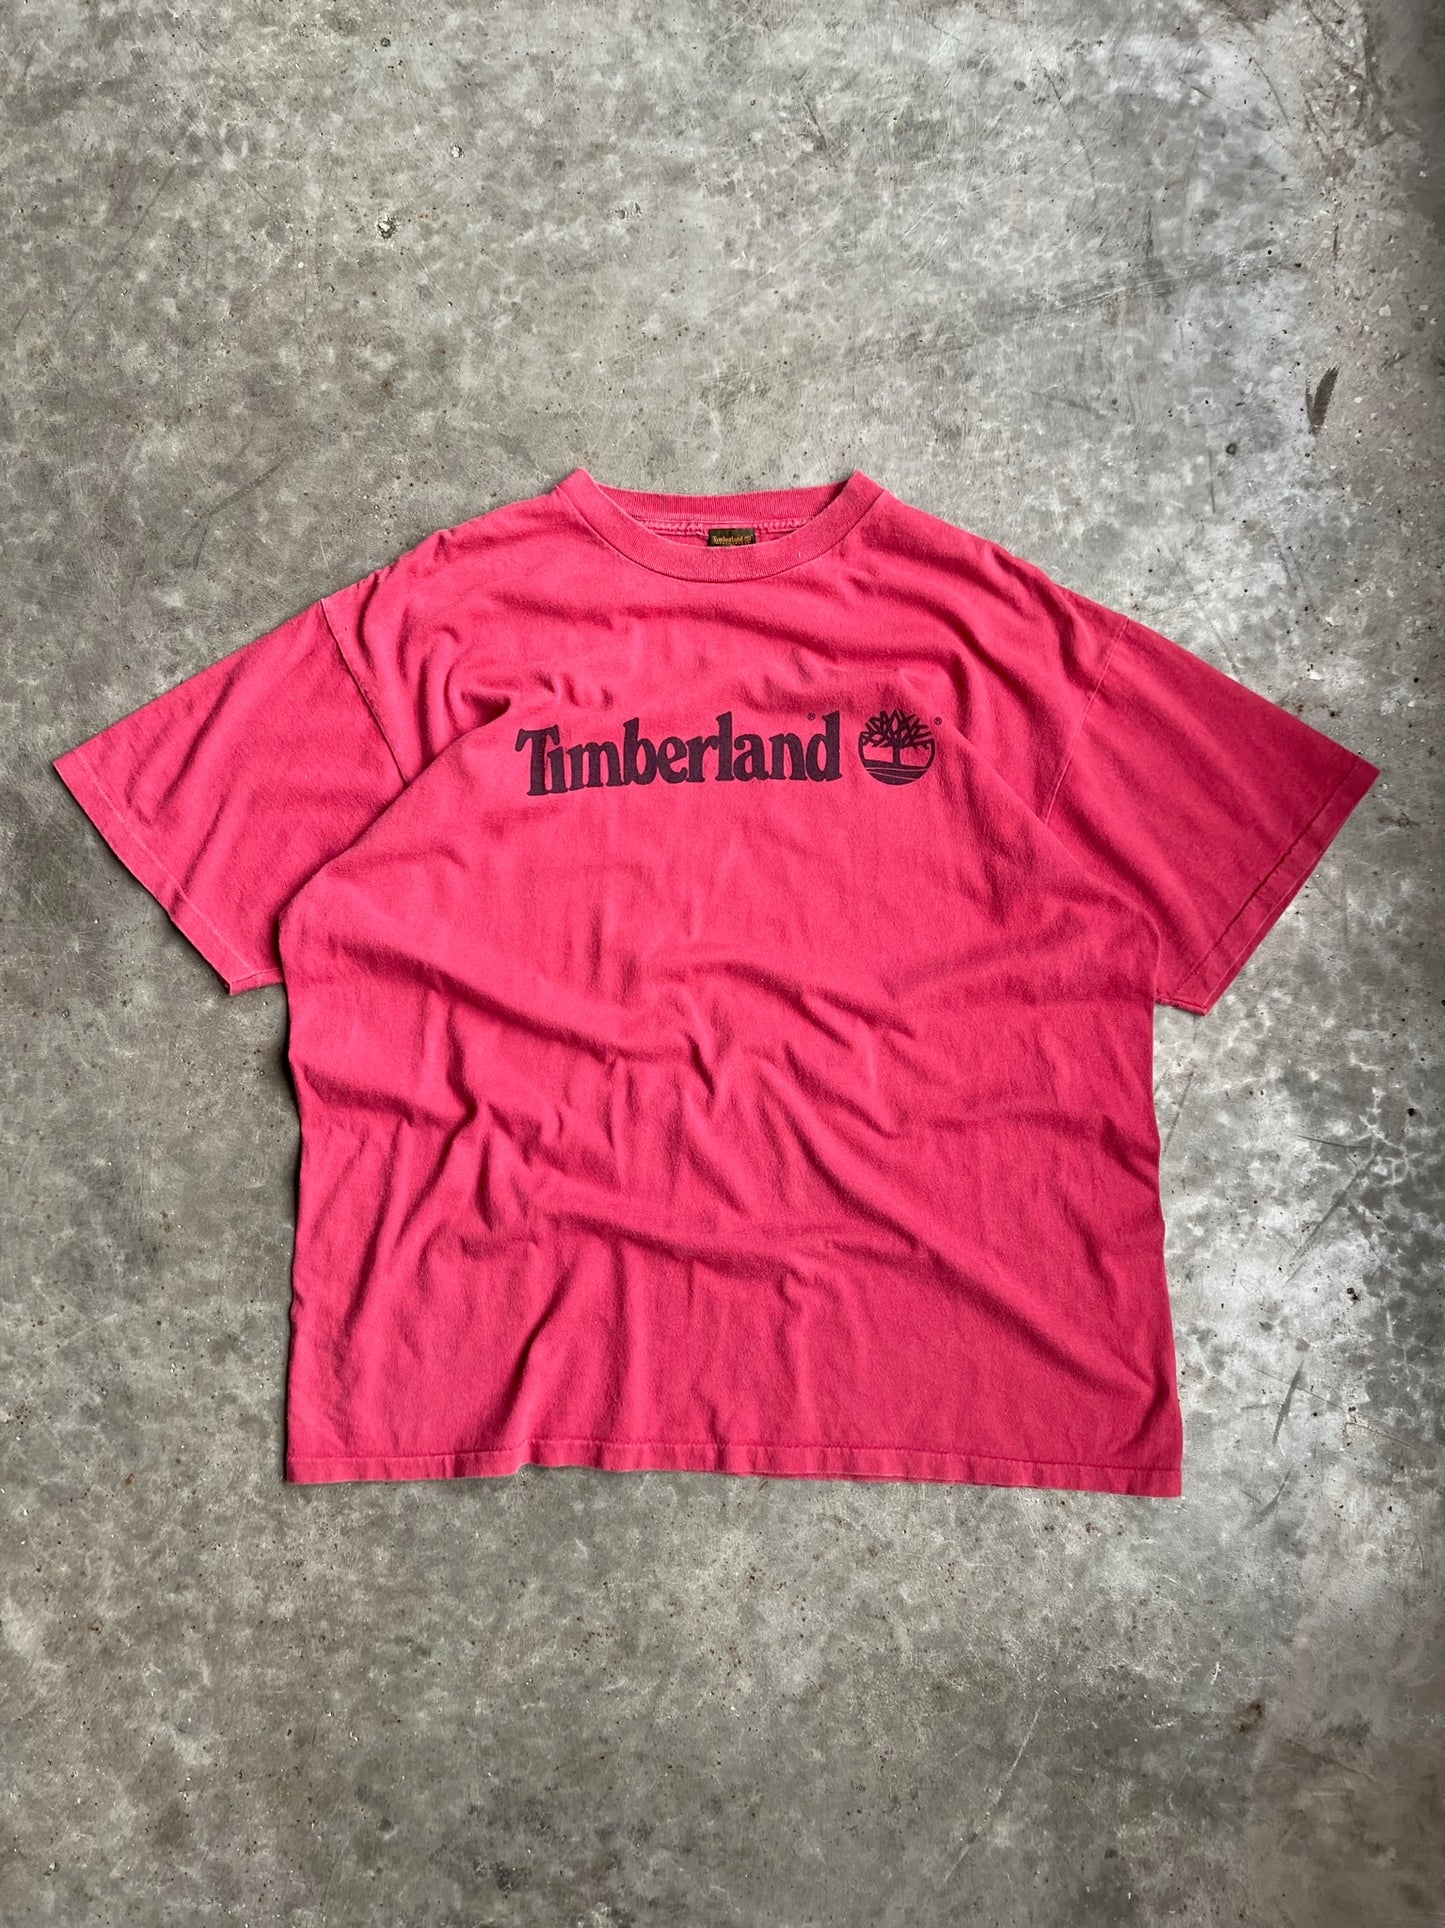 Vintage Timberland Shirt - XL